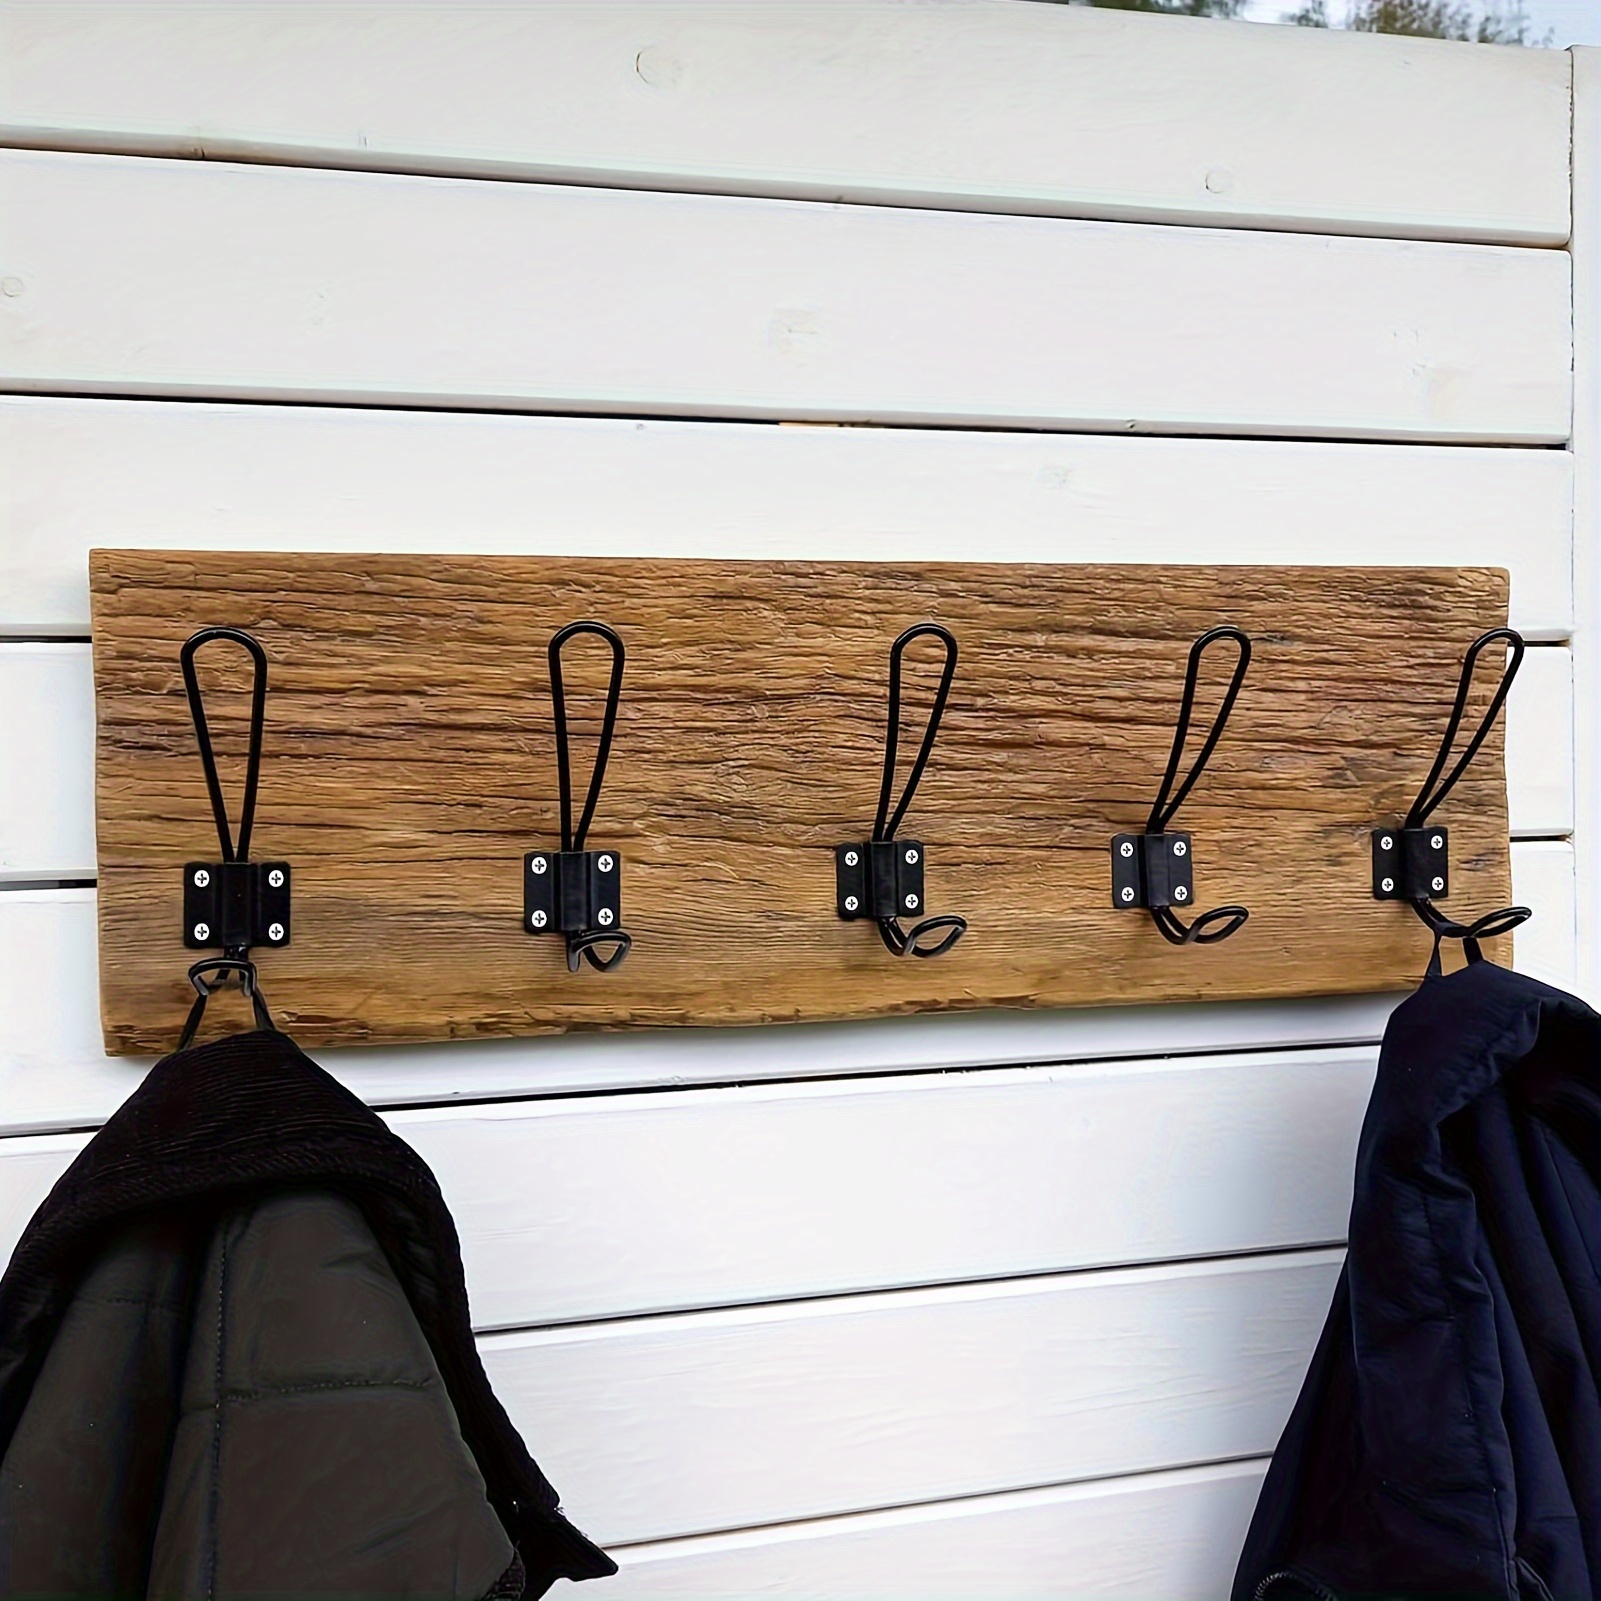 WEBI Rustic Hooks:Cast Iron,5 Packs Decorative Coat Hooks Wall Mounted  Vintage Rustic Robe Towel Hook,Antique Wall Hooks for Hanging